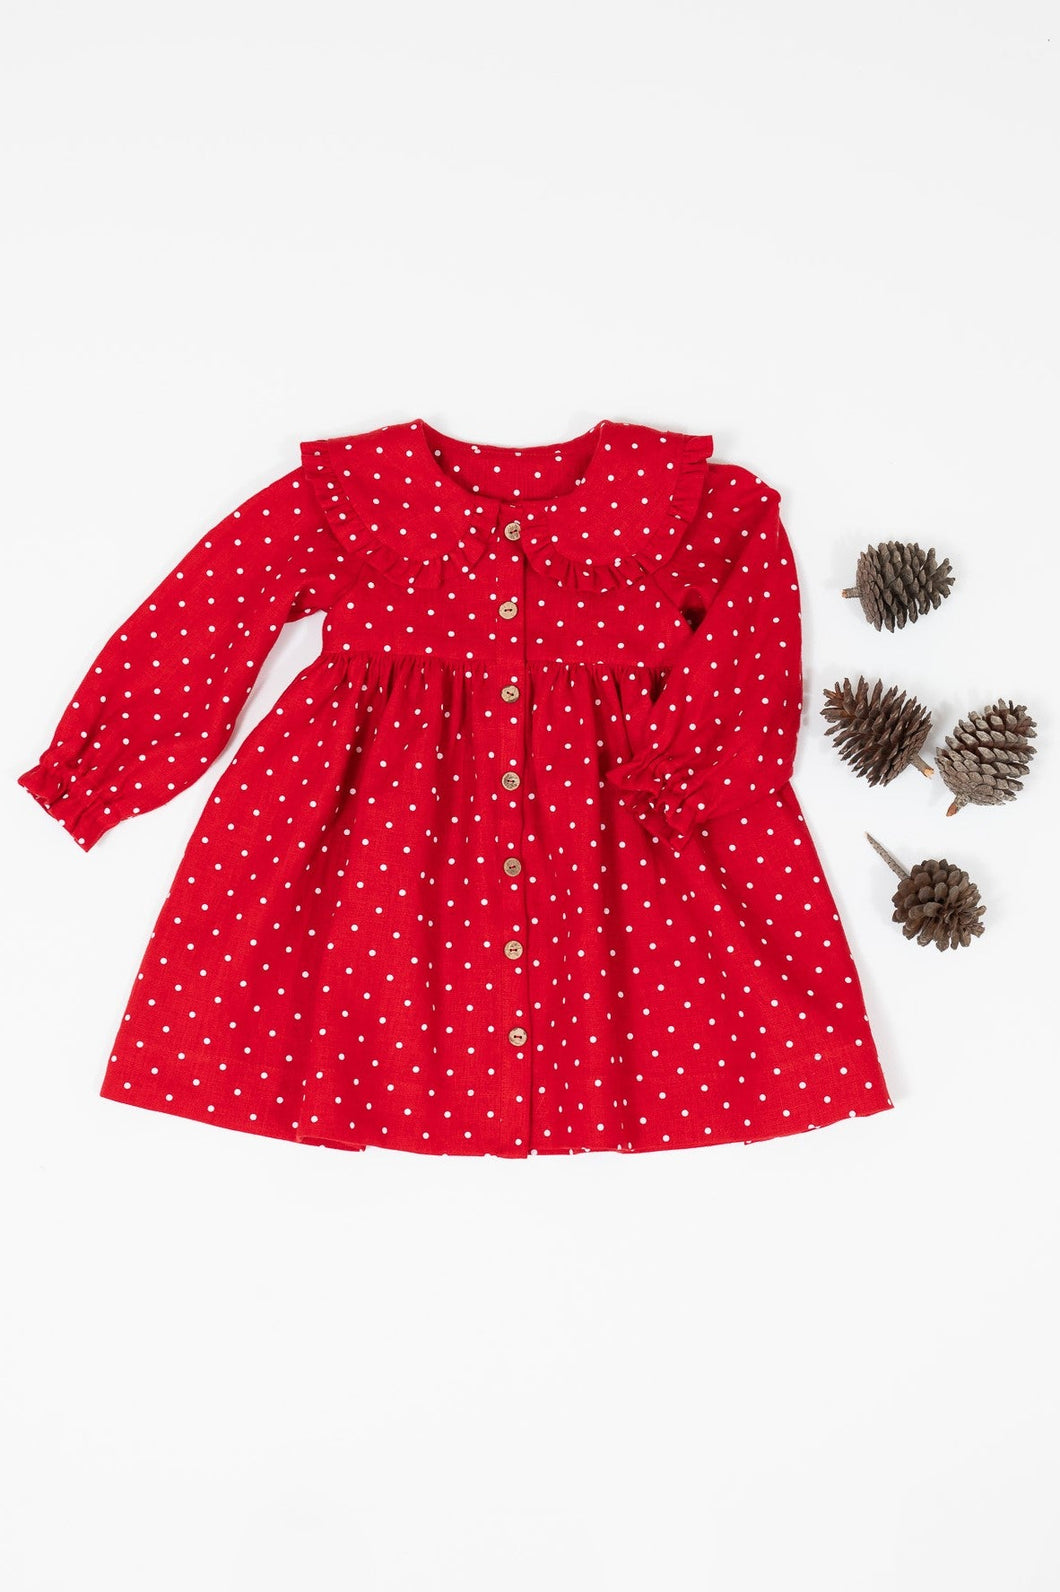 Nostalgia Dress- Red Polka Dot (Επιλογή Υφασμάτων)